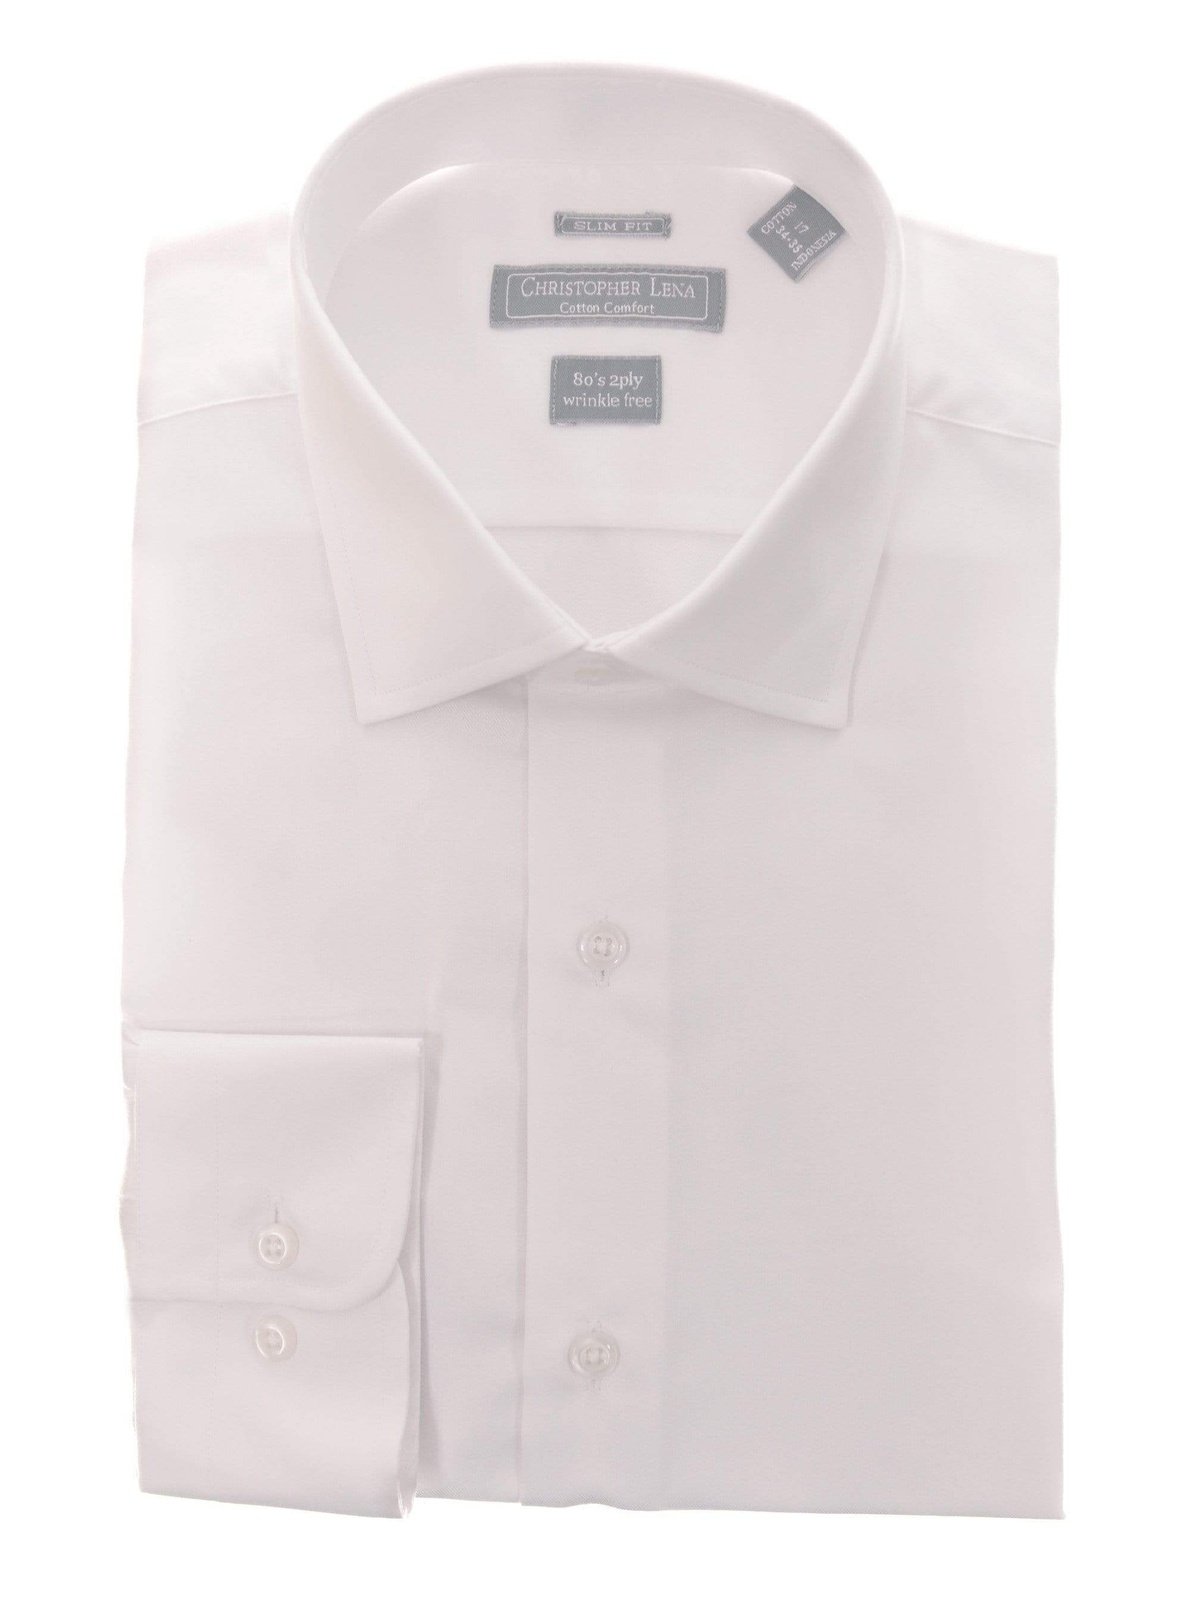 C.L. Shirts SHIRTS Men&#39;s Slim Fit Solid White Spread Collar Wrinkle Free 100% Cotton Dress Shirt